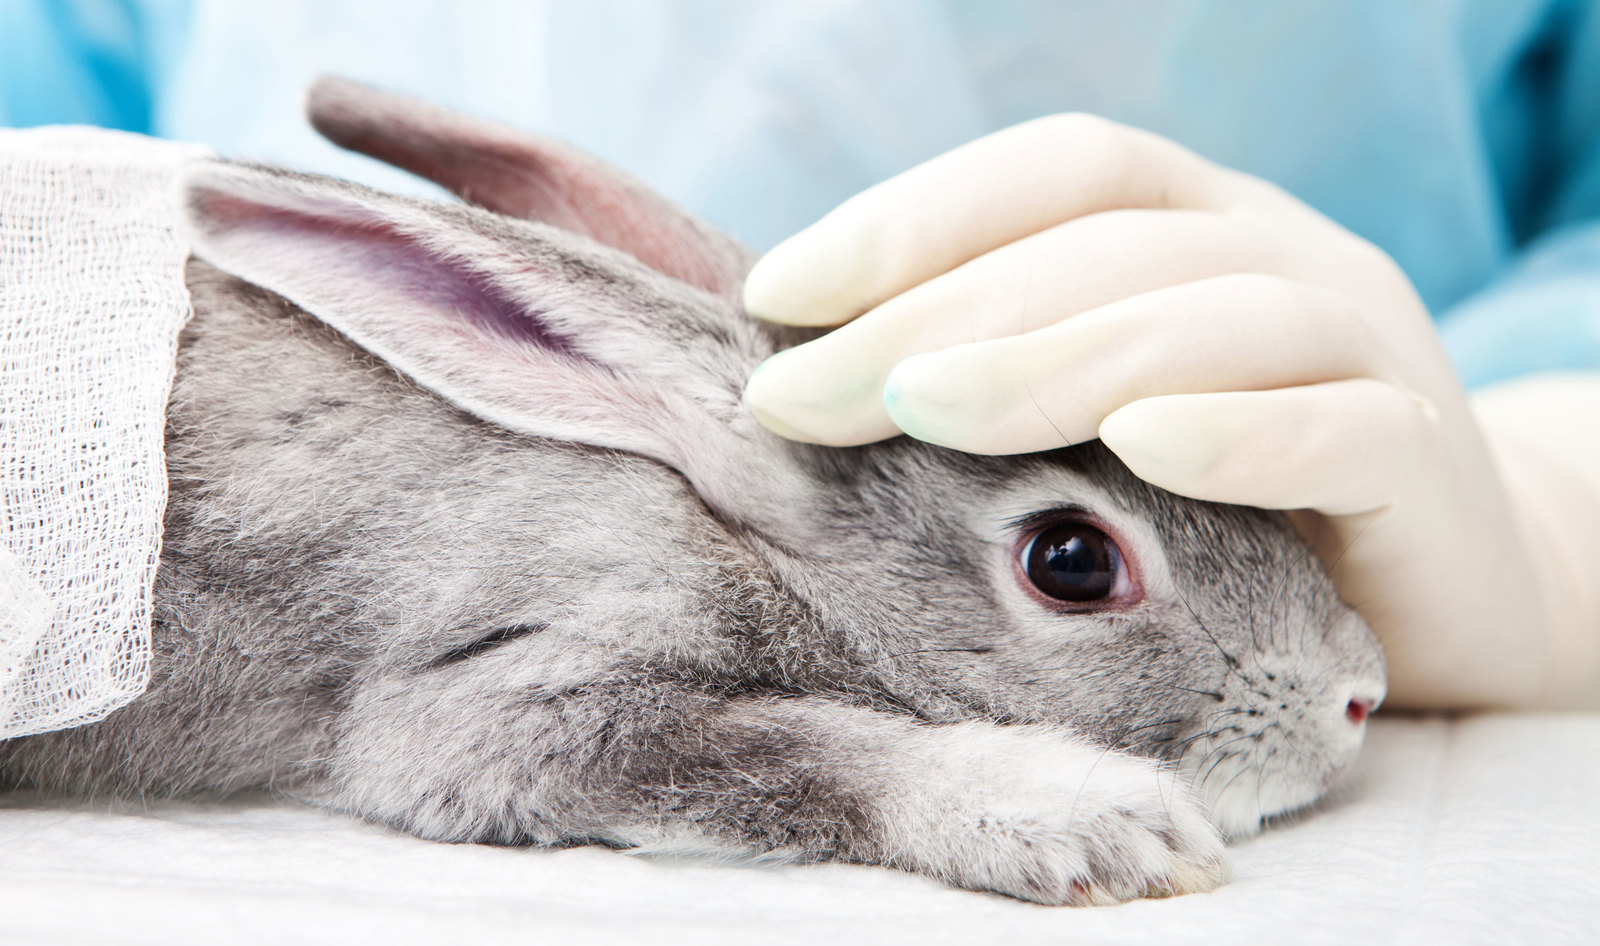 Parlamento Europeo vota a favor de eliminar los experimentos con animales